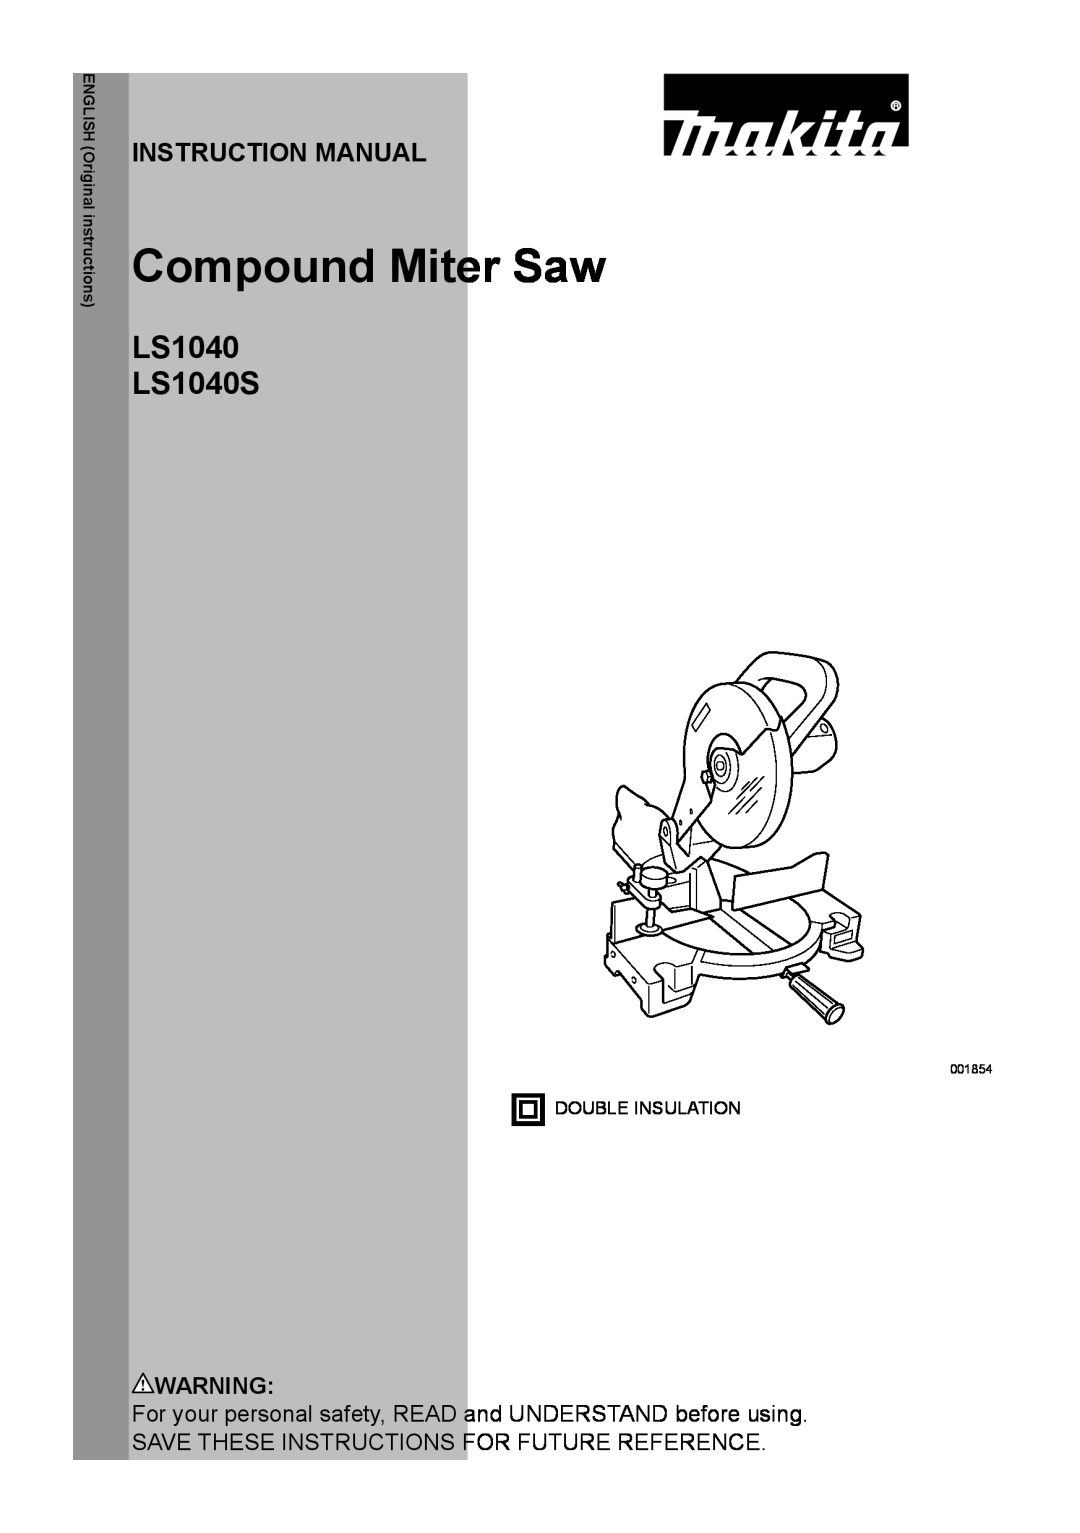 Makita instruction manual Compound Miter Saw, LS1040 LS1040S, Instruction Manual, ENGLISH Original instructions, 001854 